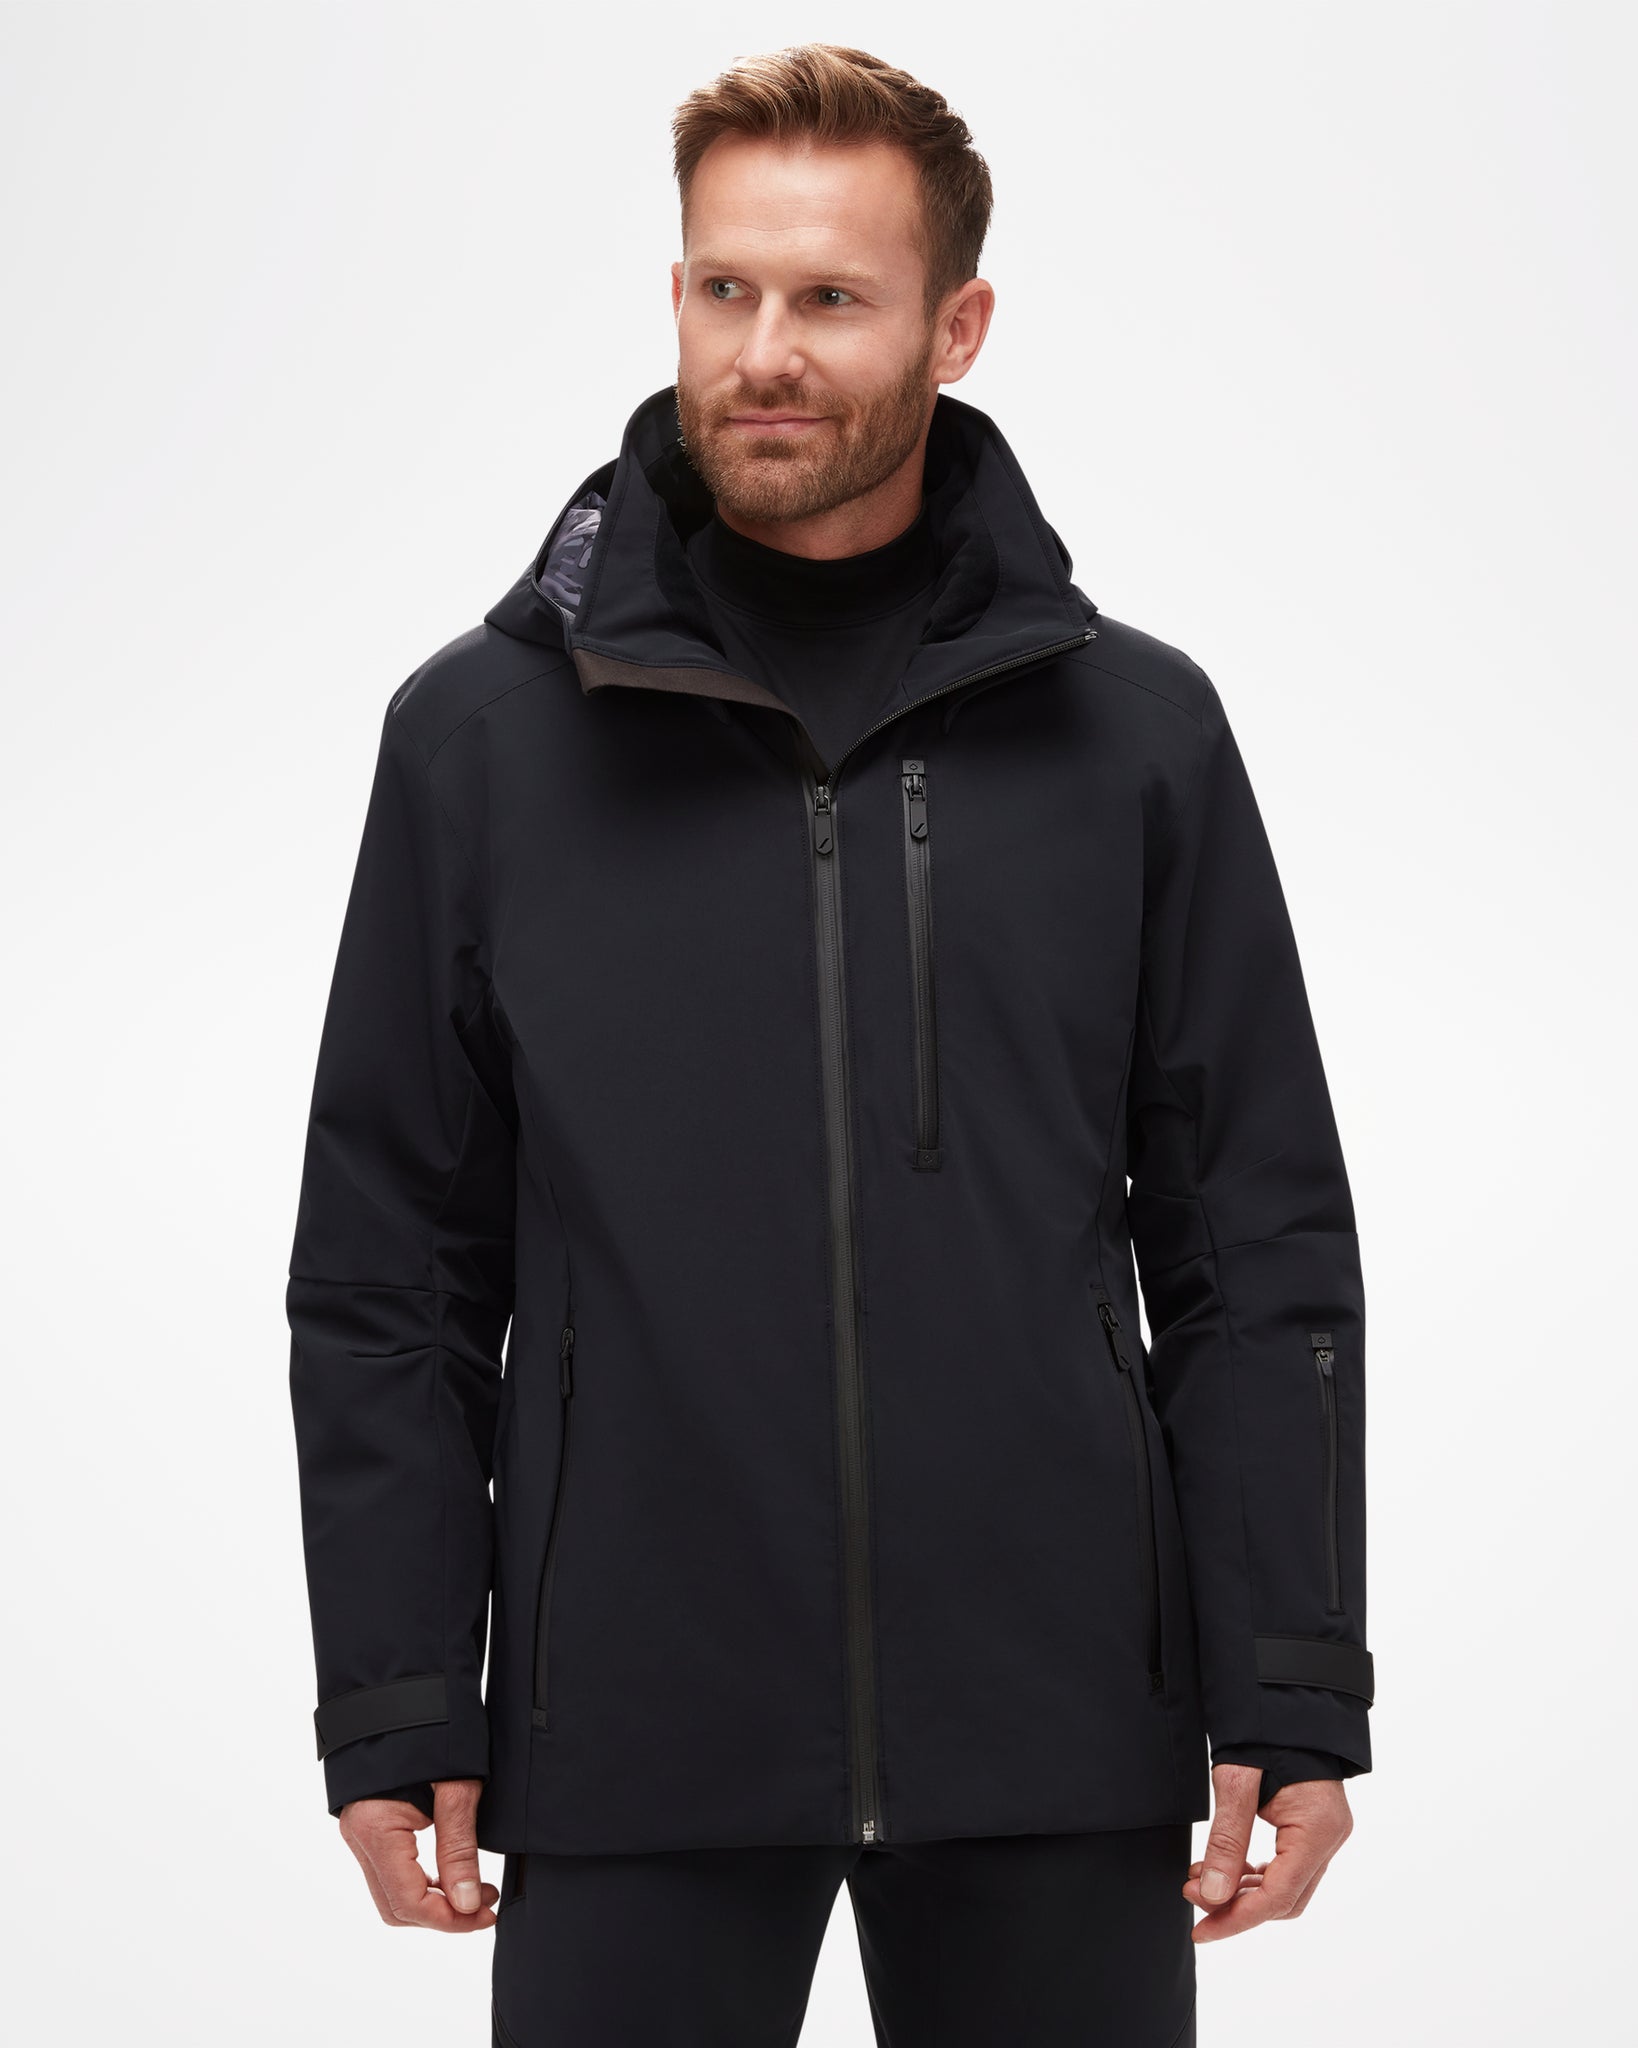 Men's Coats & Jackets  ASPENX Premium Outerwear for Men